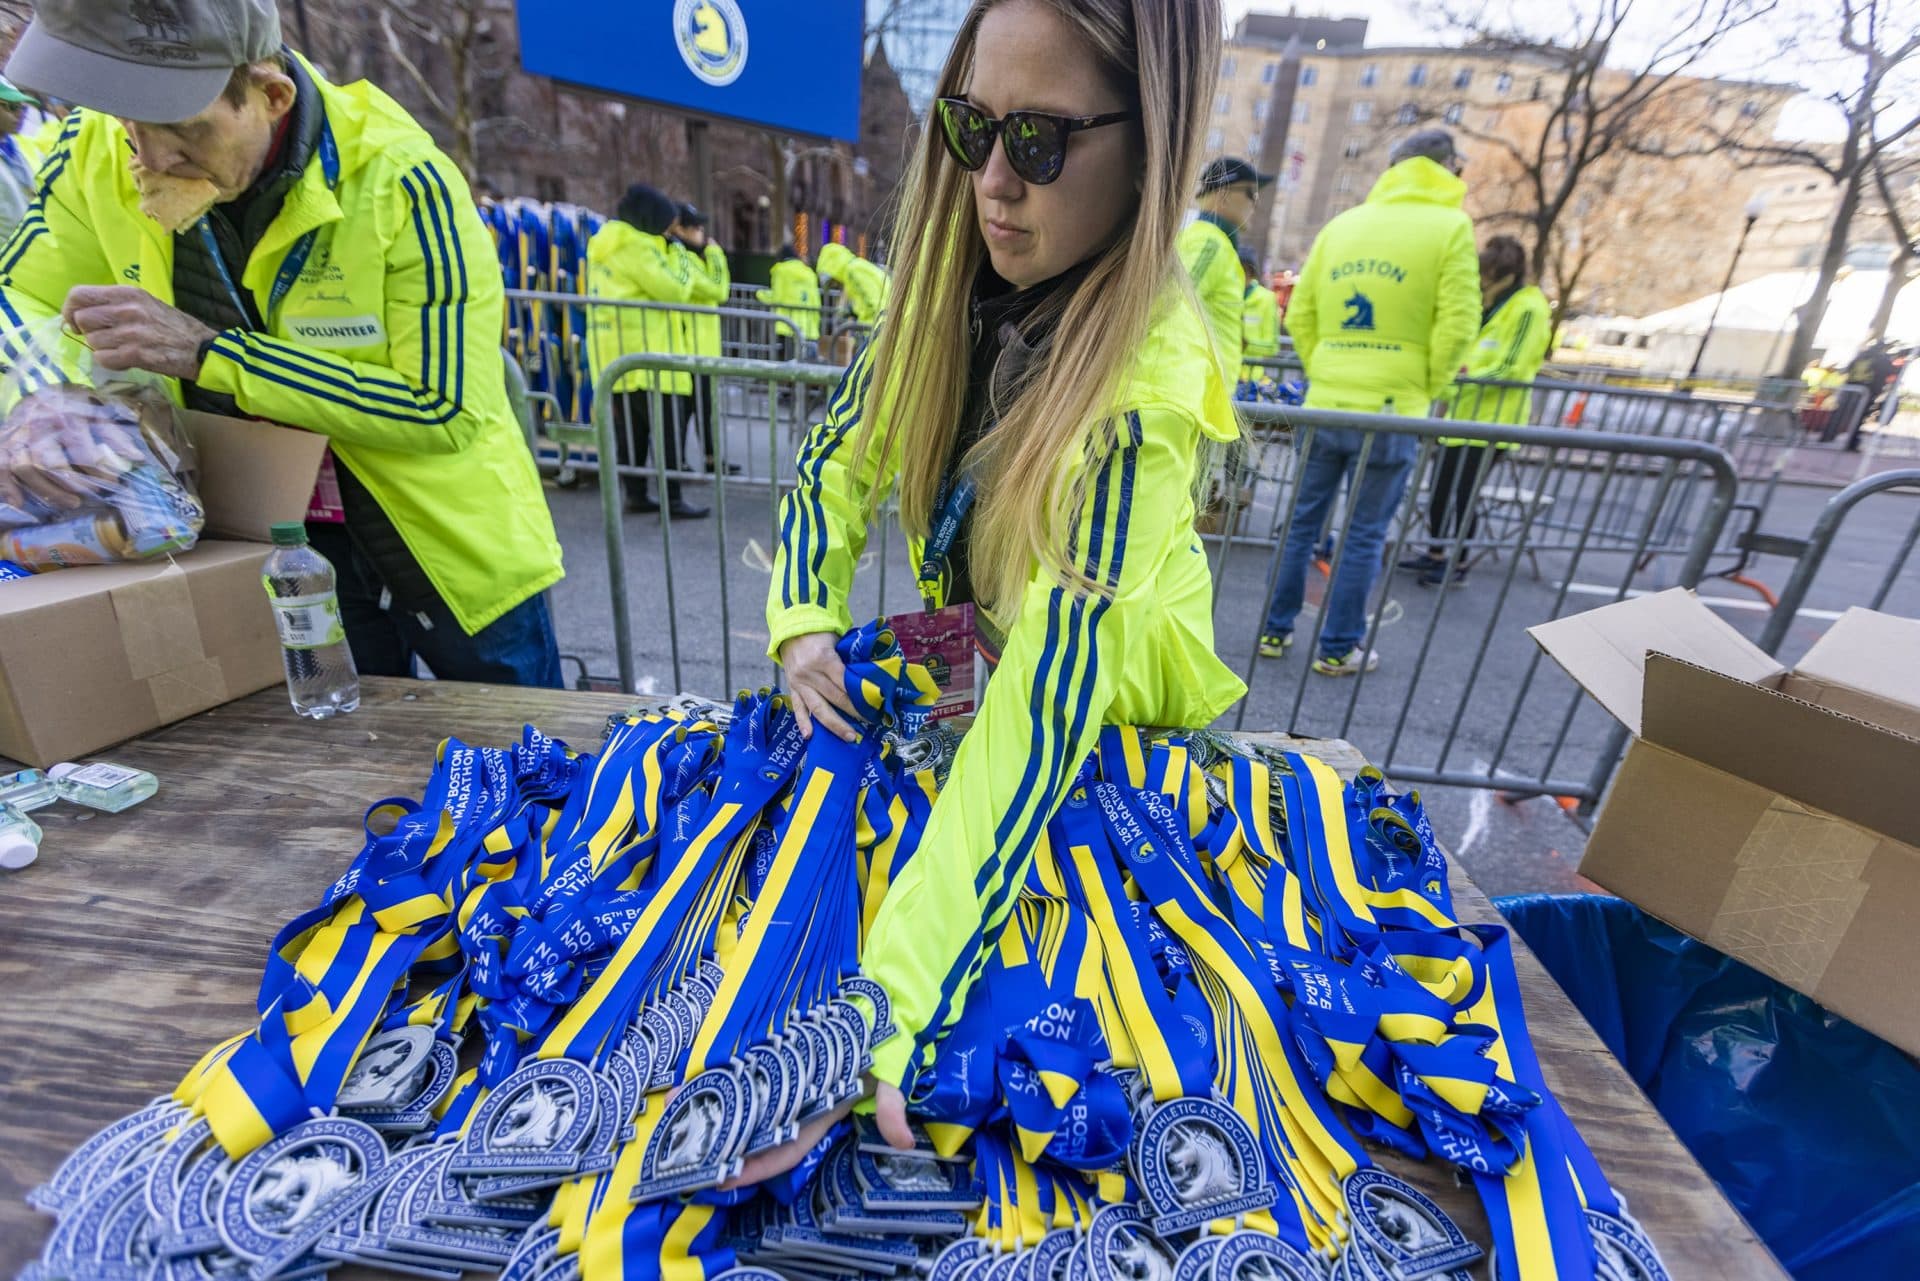 Kayla Biagioni unpacks medals onto a table on Boylston Street. (Jesse Costa/WBUR)